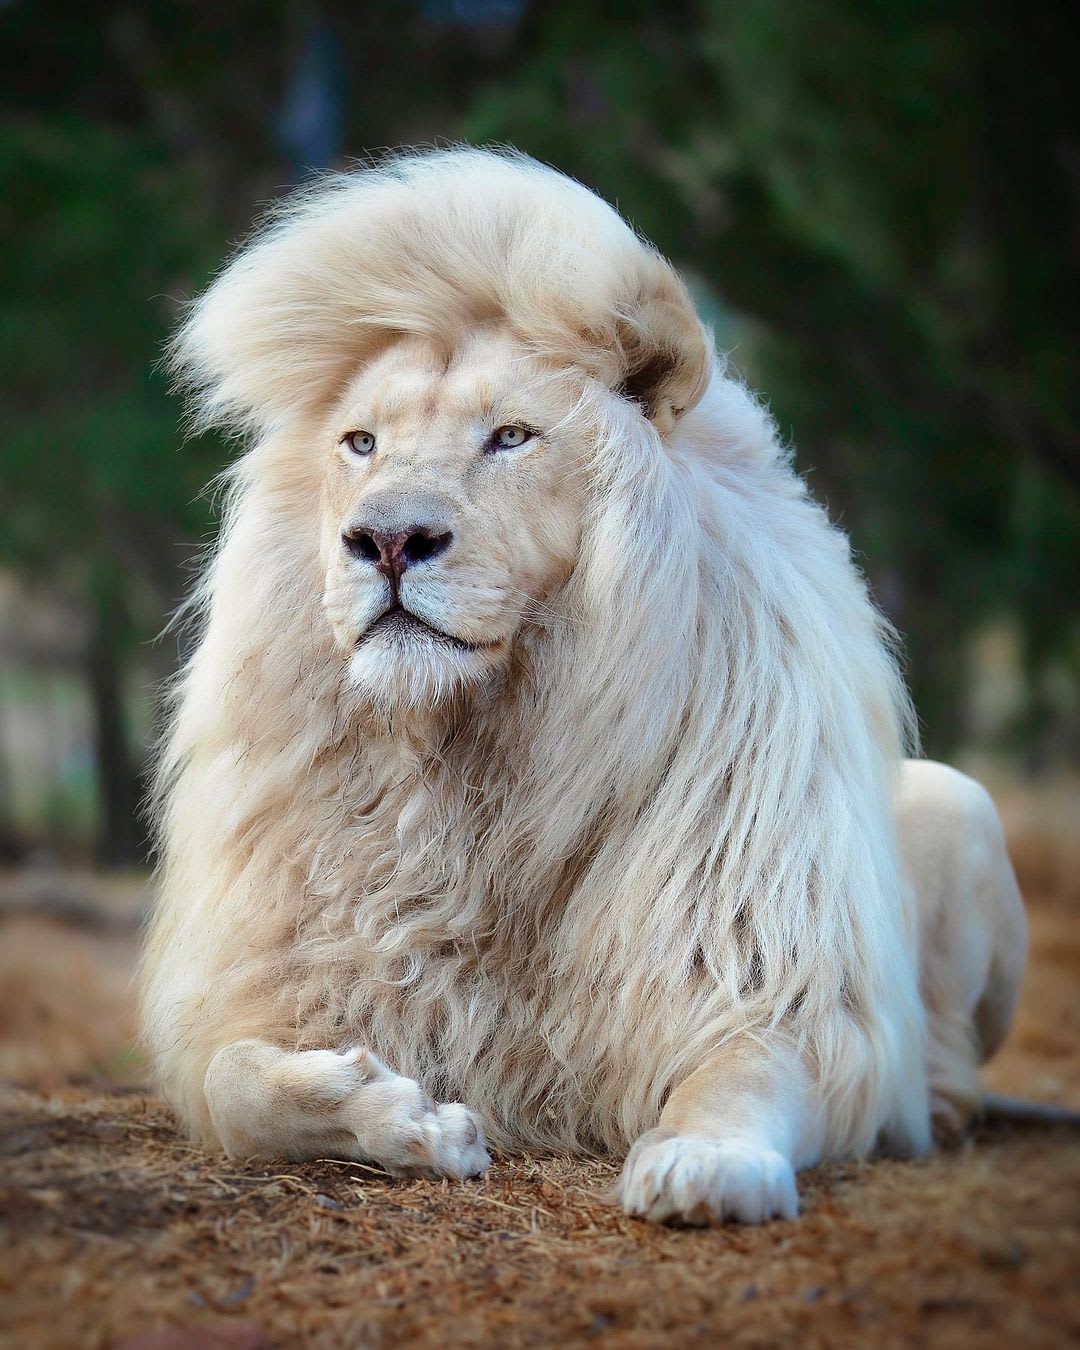 A Very Stylish Lion (Photo: Simon Needham) 🦁